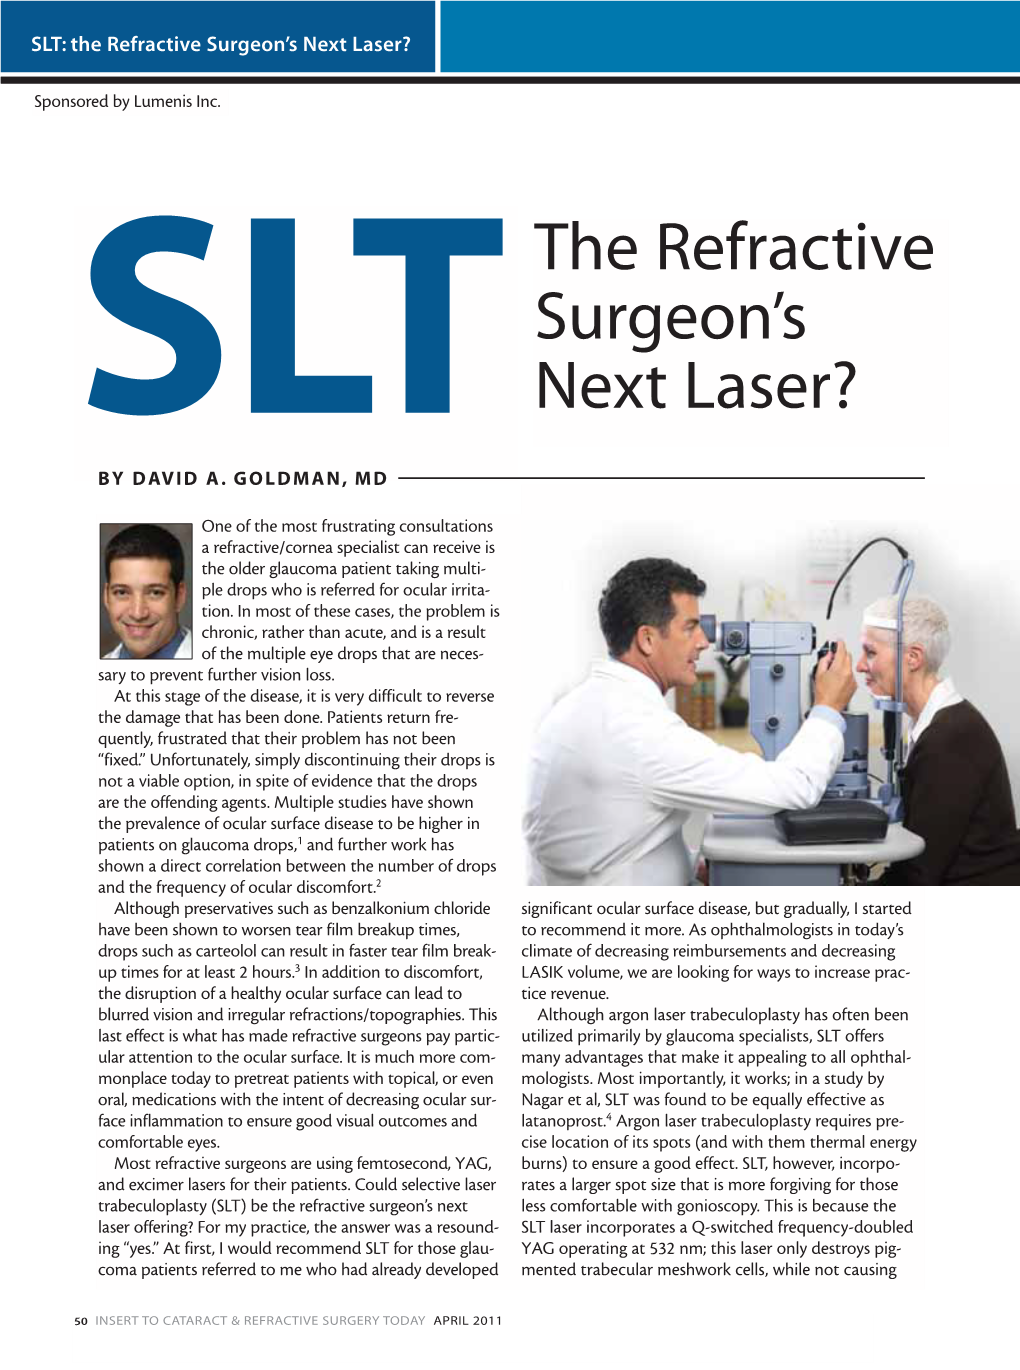 The Refractive Surgeon's Next Laser?